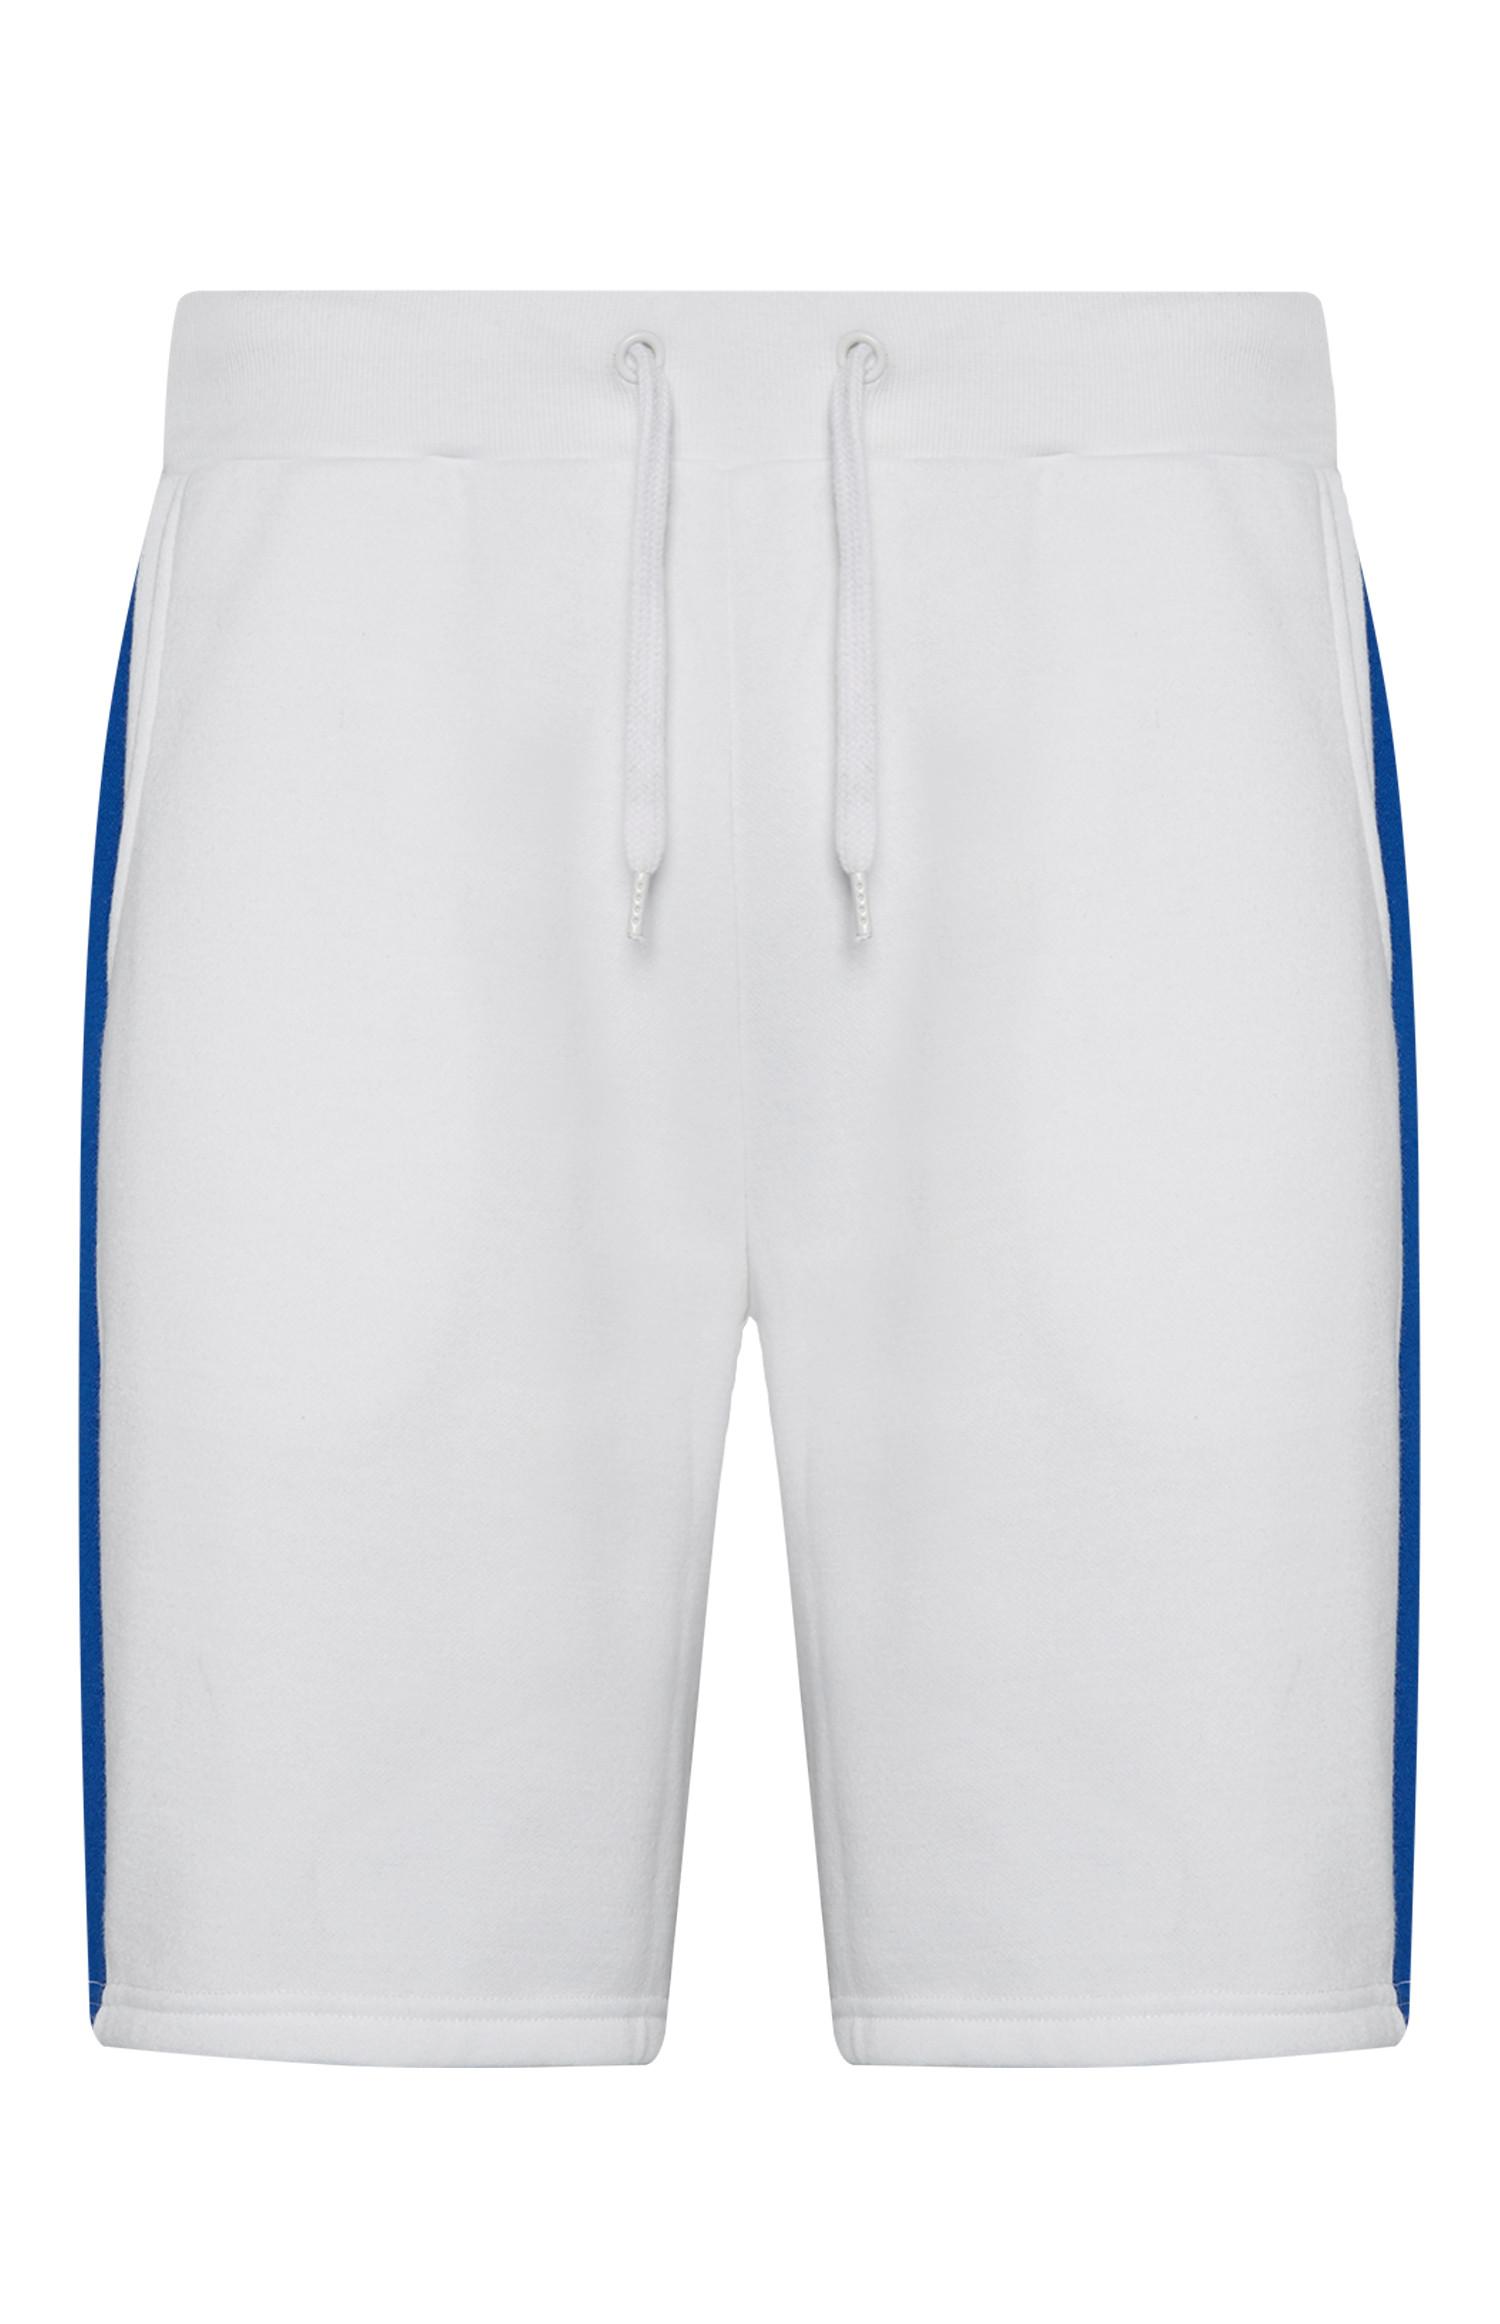 White Shorts | Shorts | Mens | Categories | Primark France